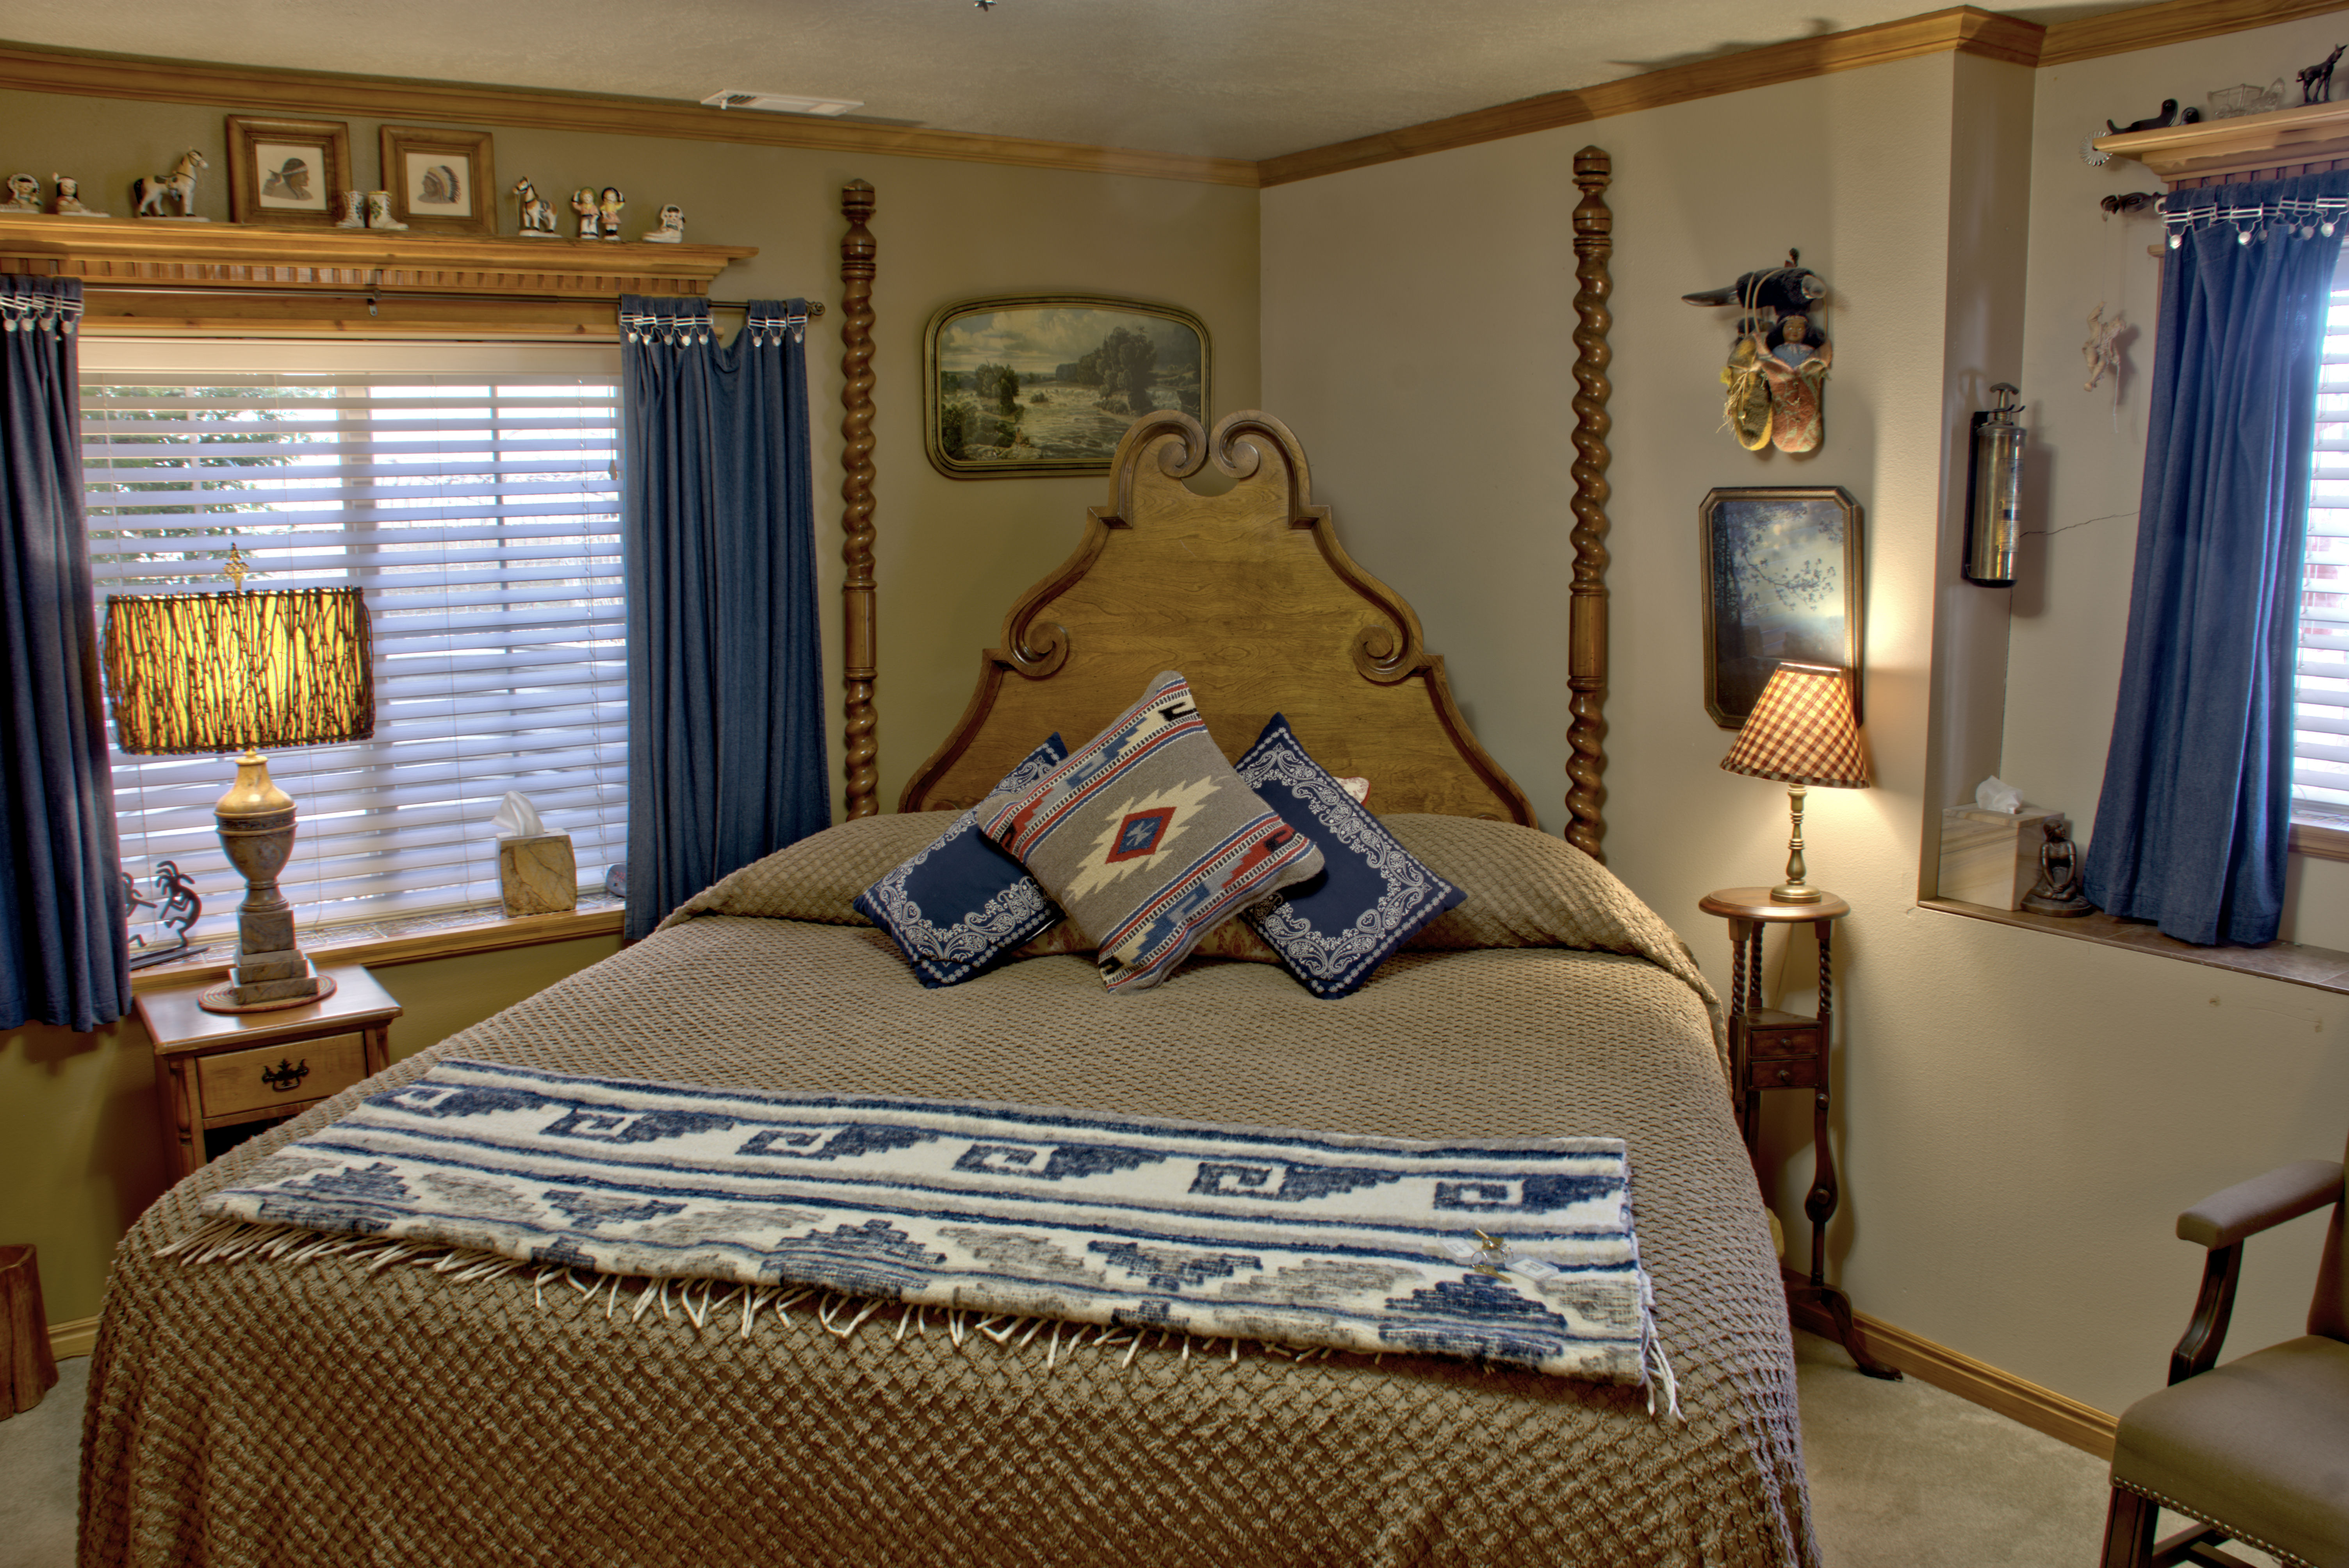 The Lodge Room in Cedar City, Utah